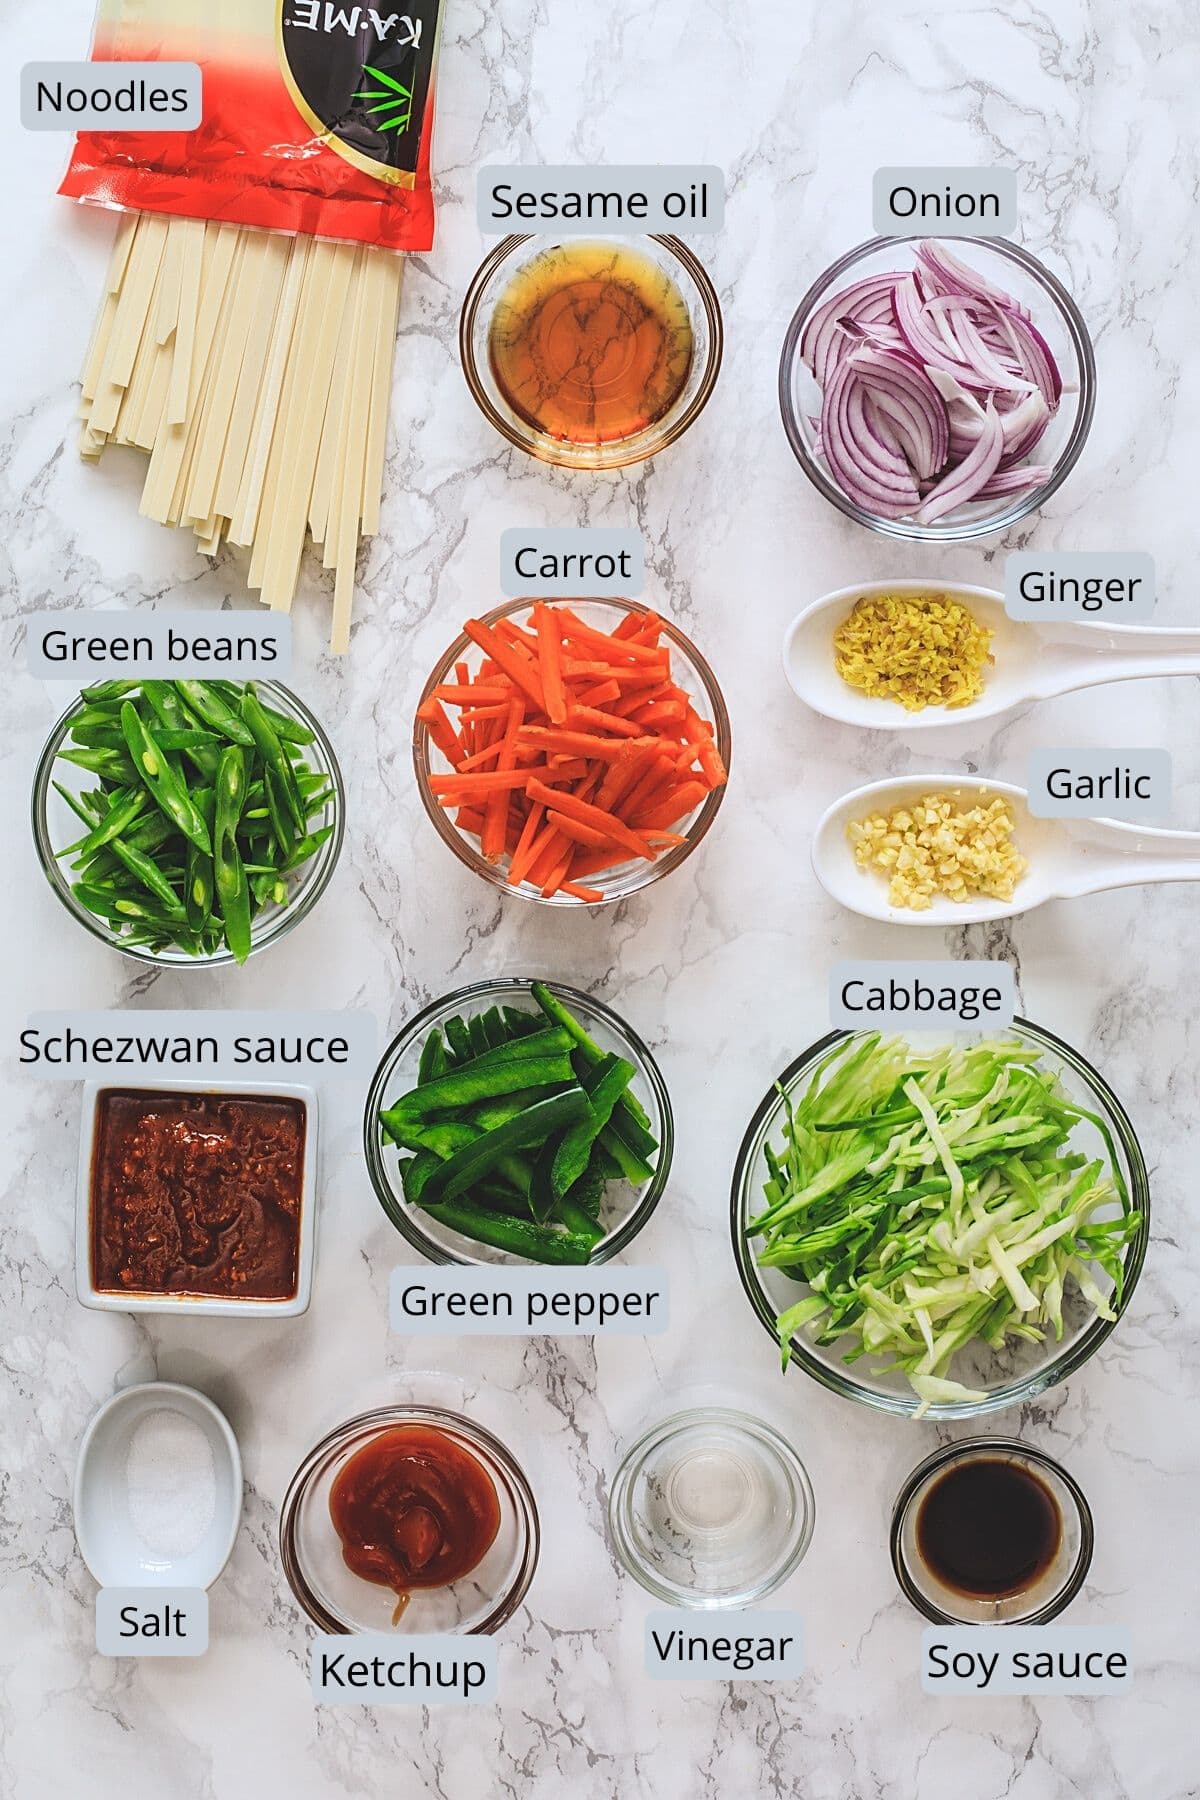 Ingredients used in schezwan sauce includes noodles, oil, veggies, ginger, garlic, salt, sauces and vinegar.